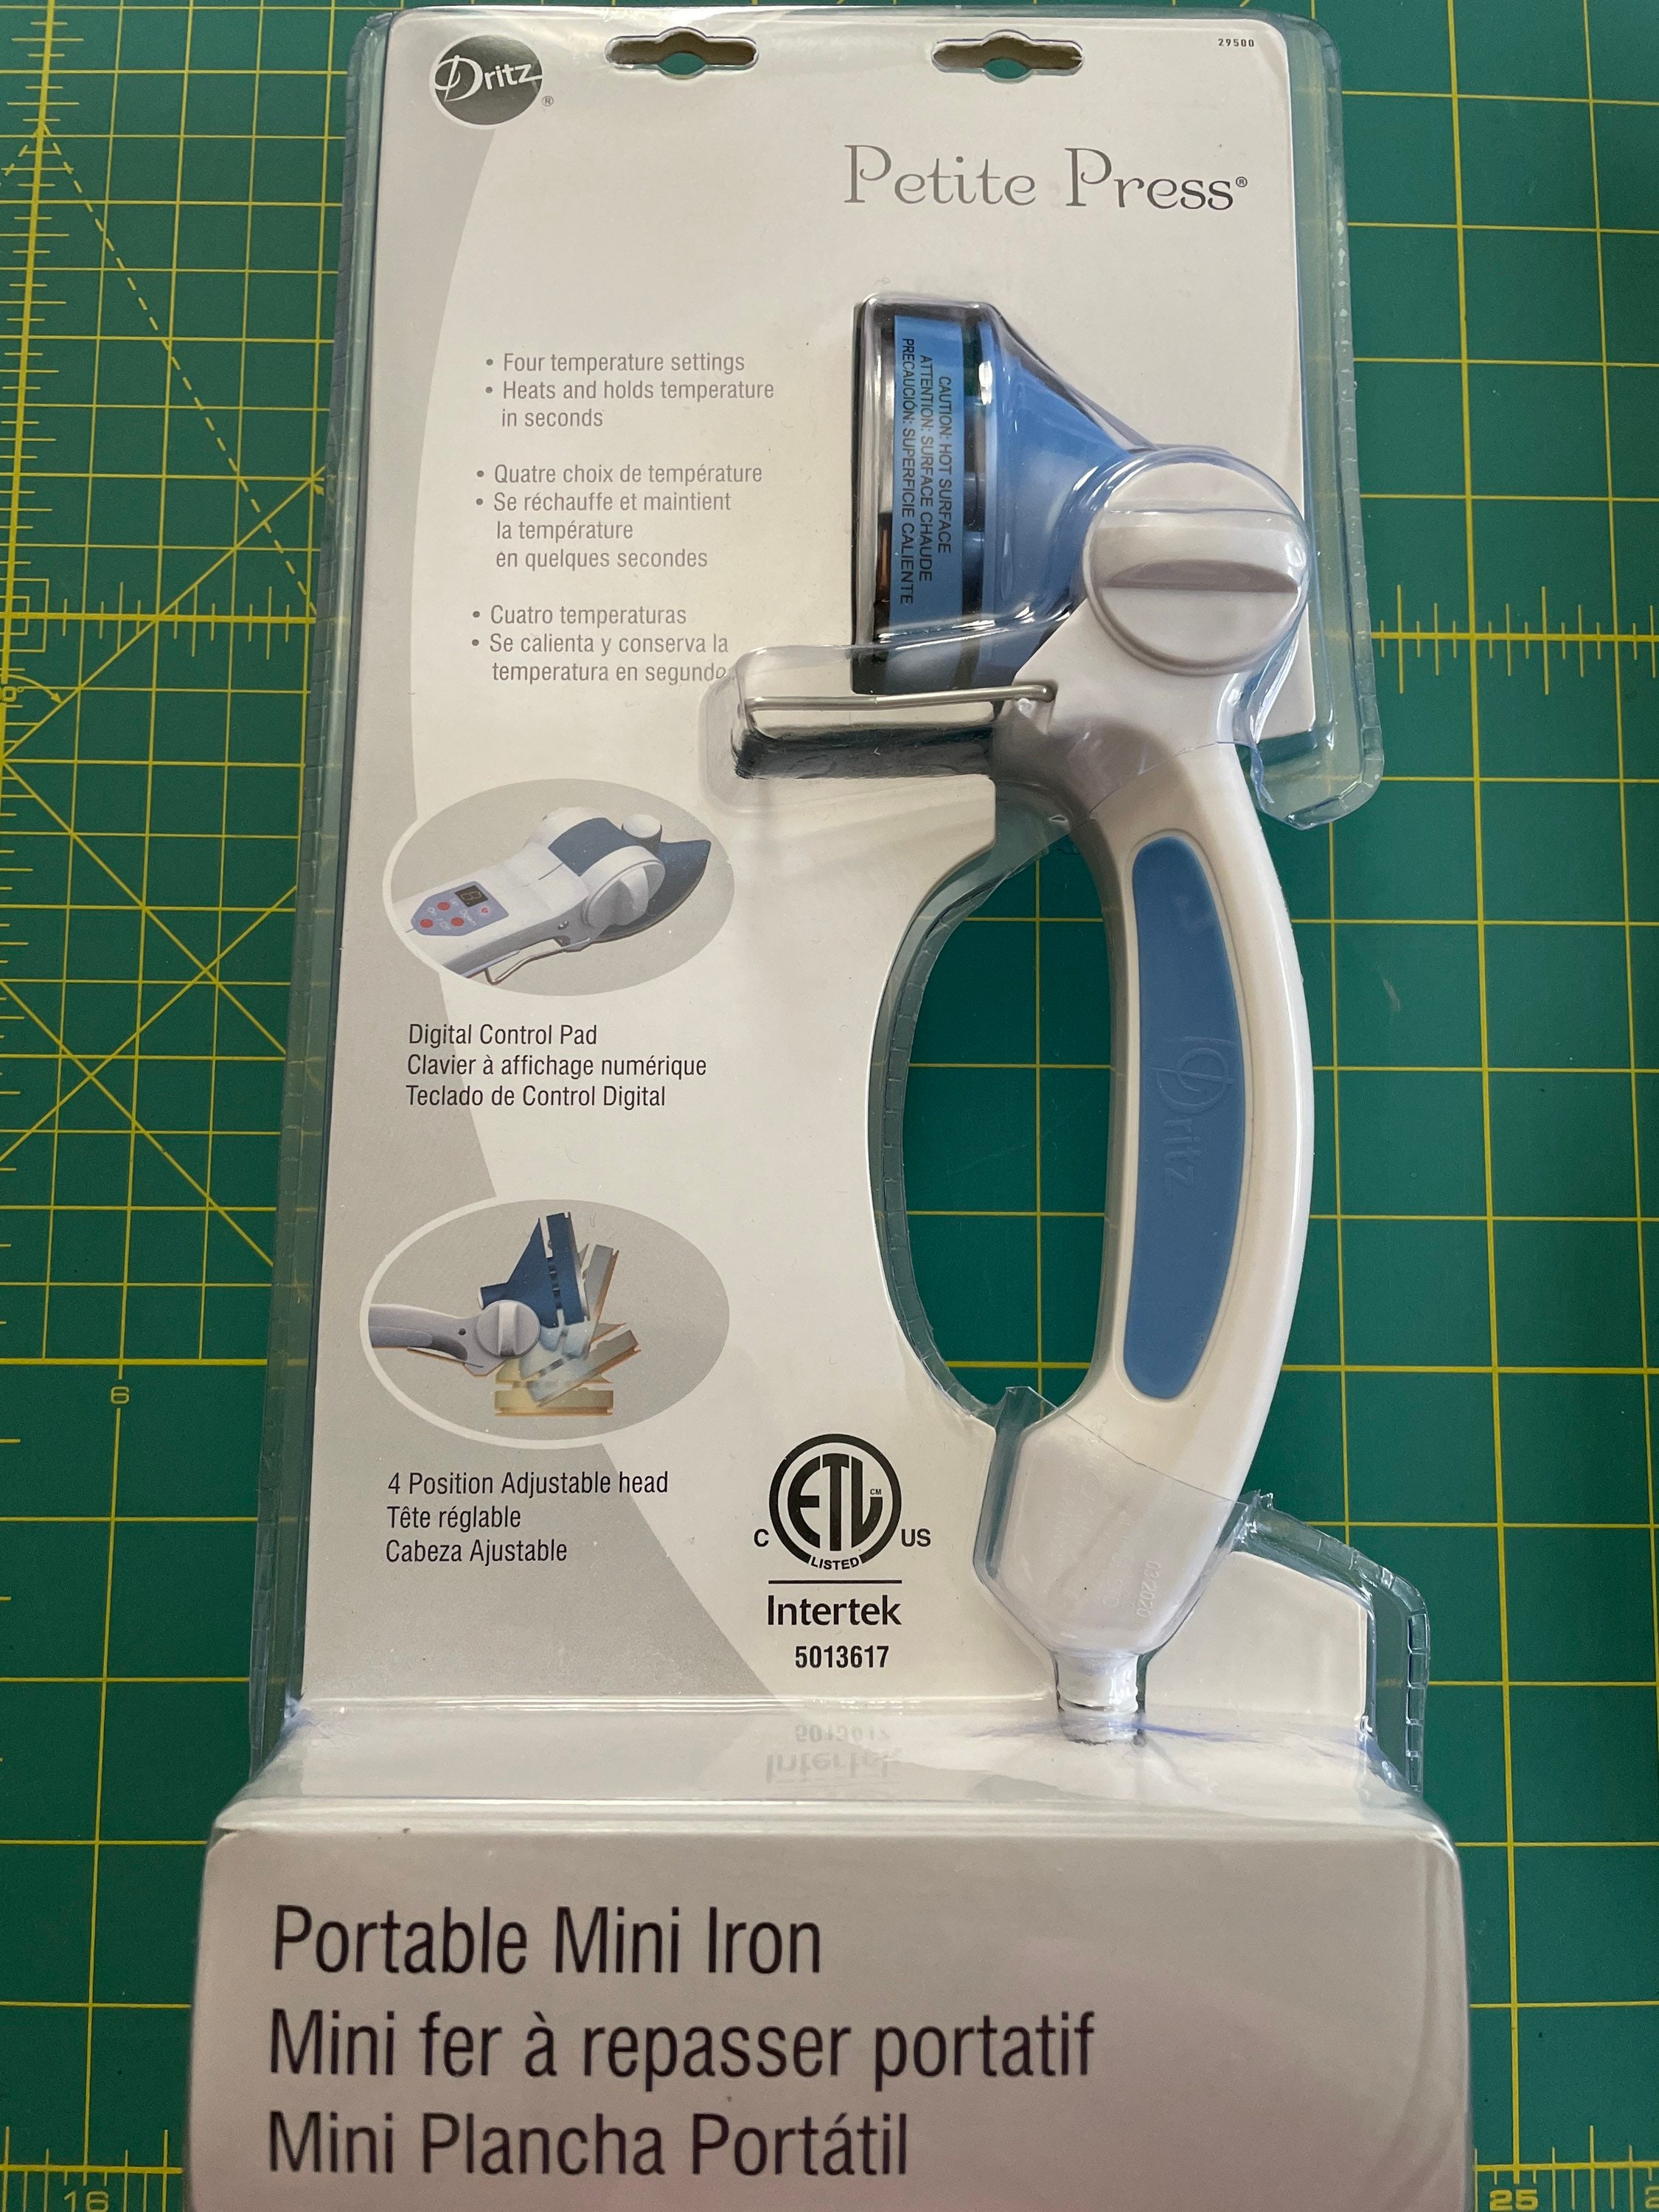 Petite Press Portable Mini Iron - Dritz